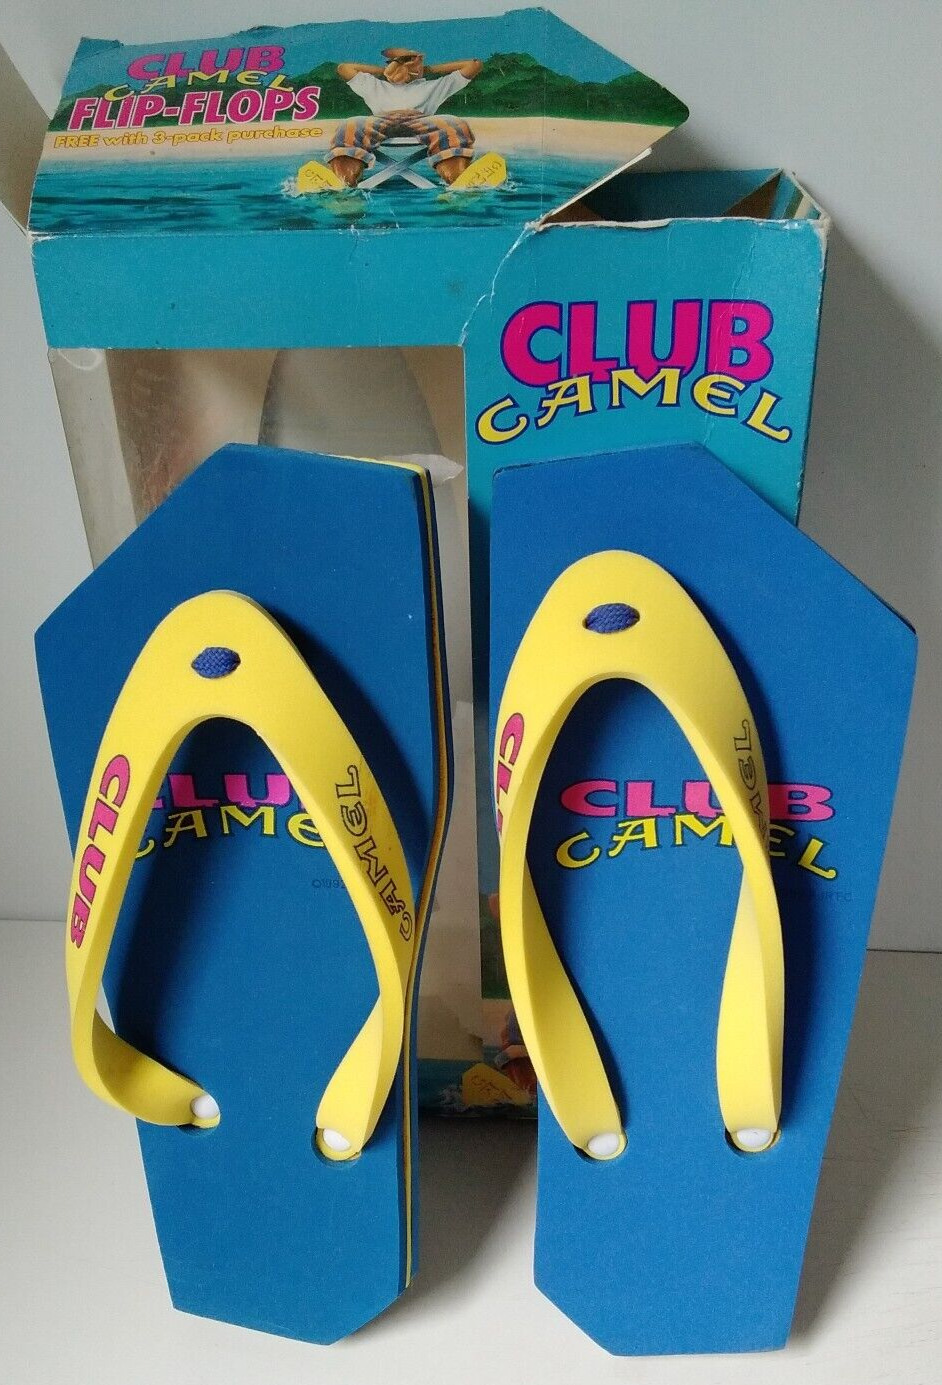 Vtg 1992 Joe Camel Cigarettes Club Camel Promotional Foam Flip Flops Sandals